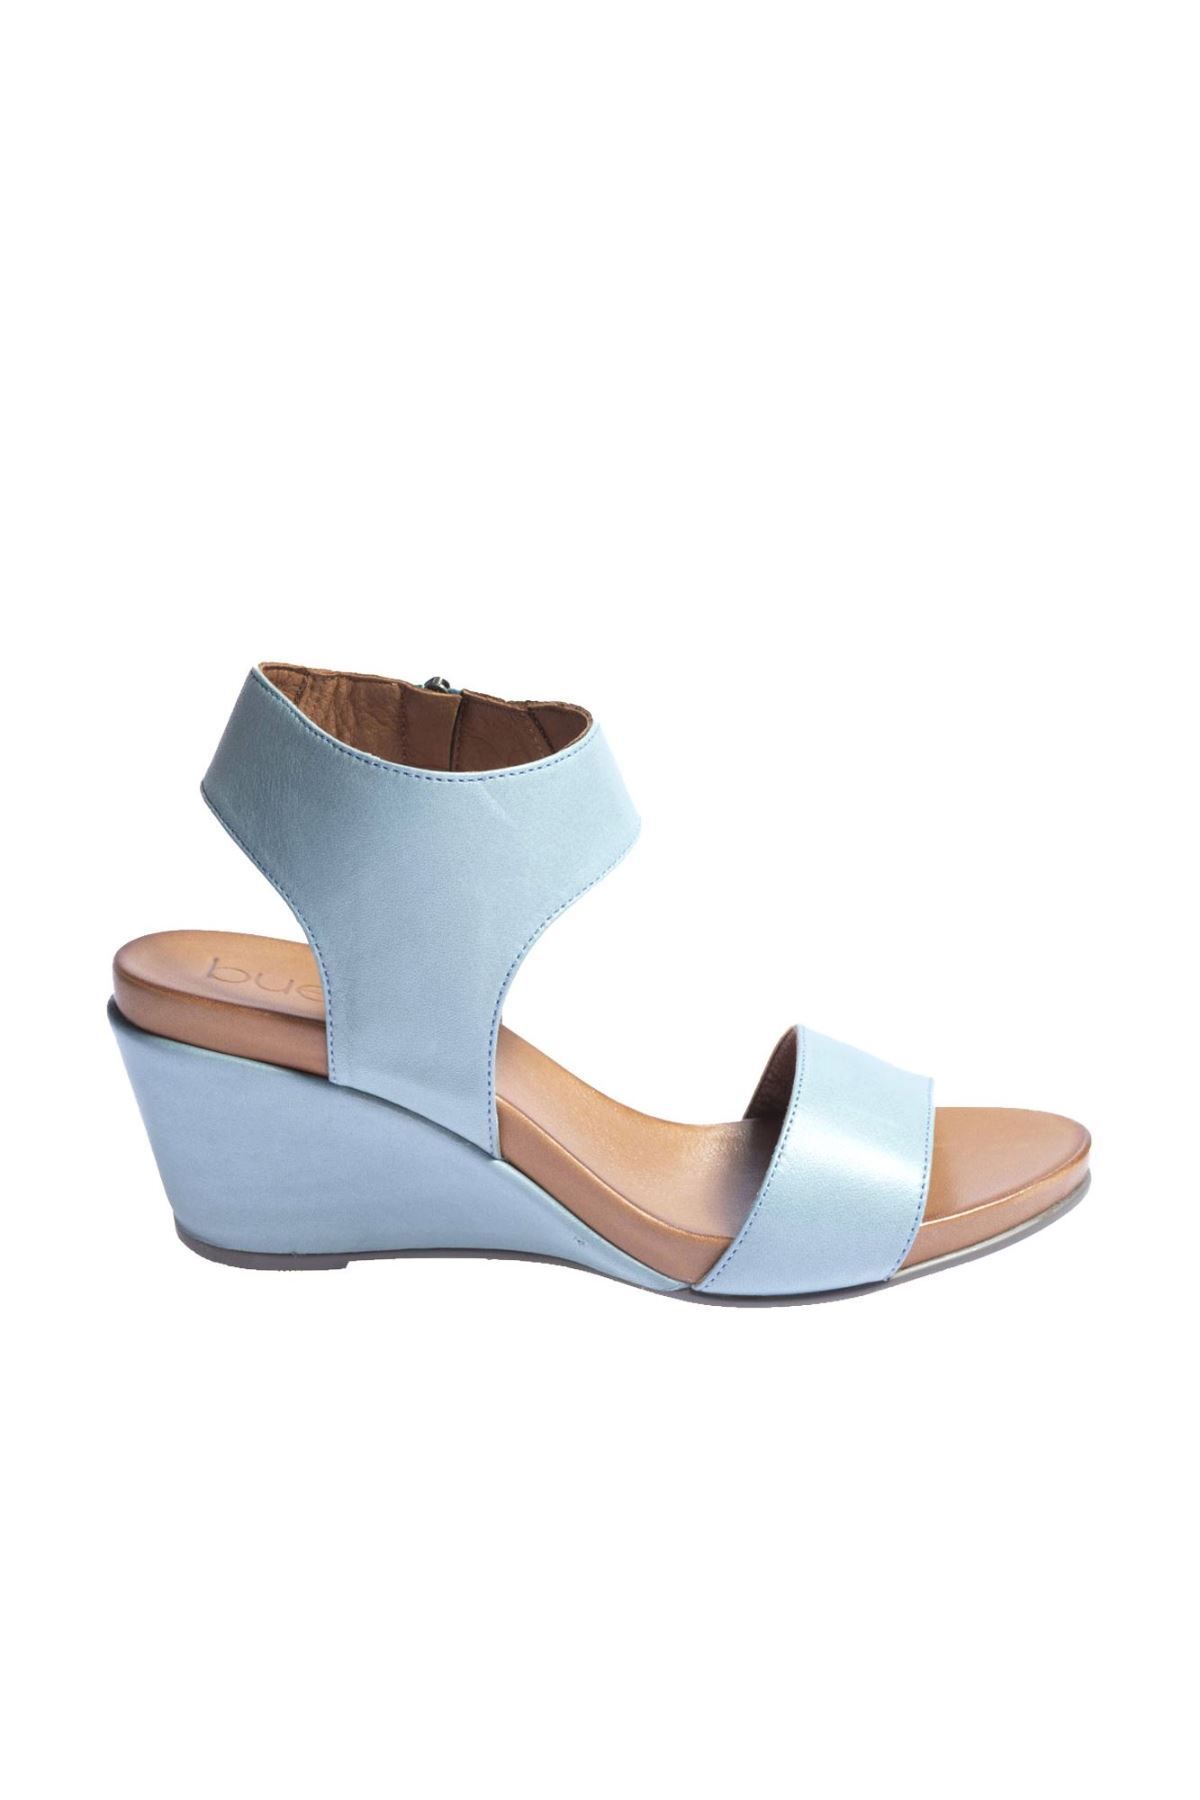 BUENO Shoes Mavi Deri Kadın Dolgu Topuklu Sandalet